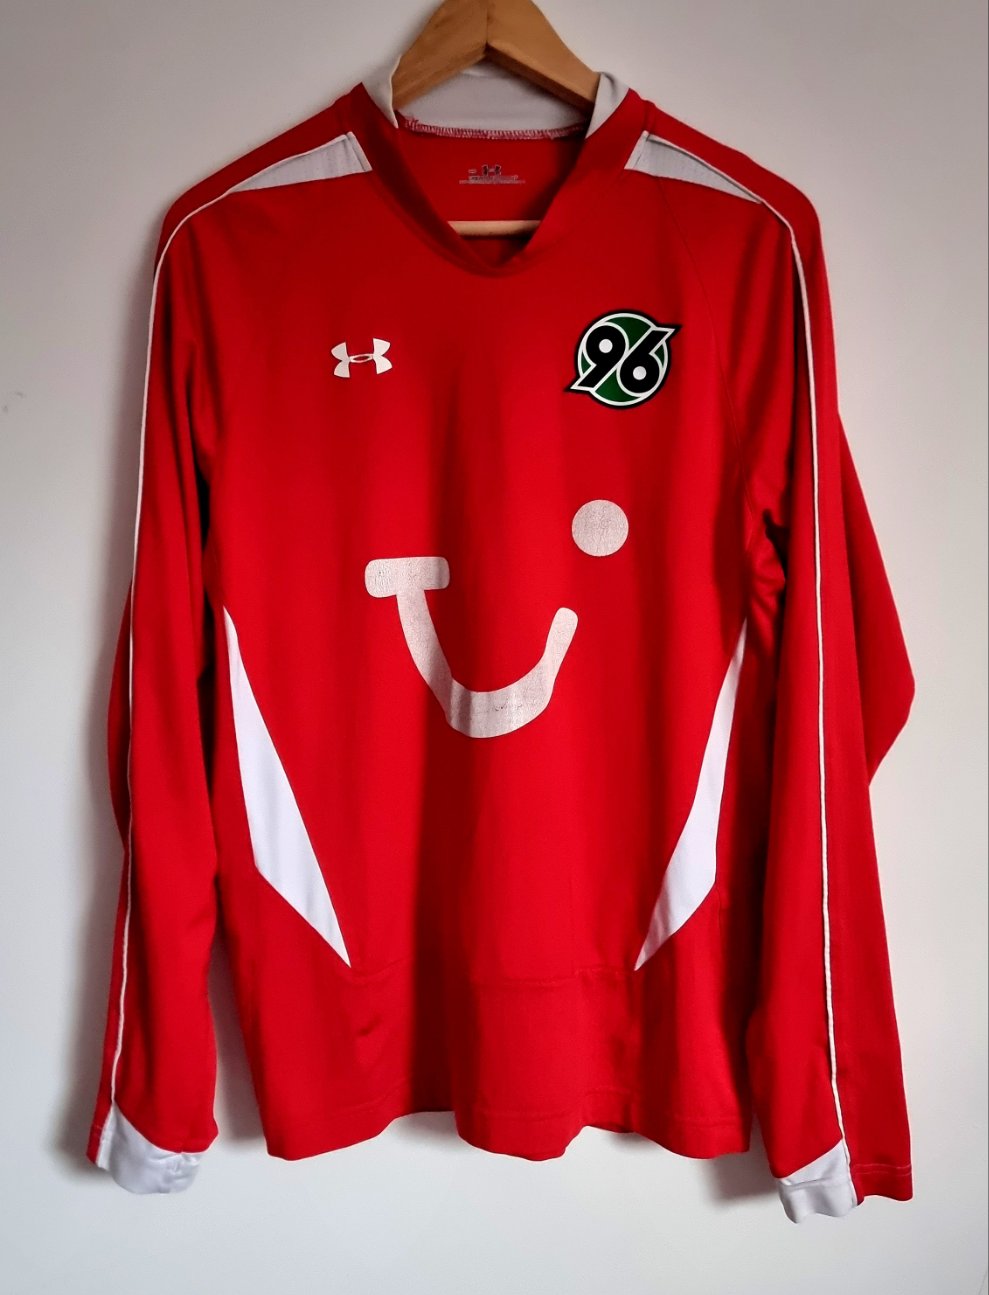 precedent Verloren hart hooi Under Armour Hannover 96 08/09 Long Sleeve Home Shirt Large – Granny's  Football Store